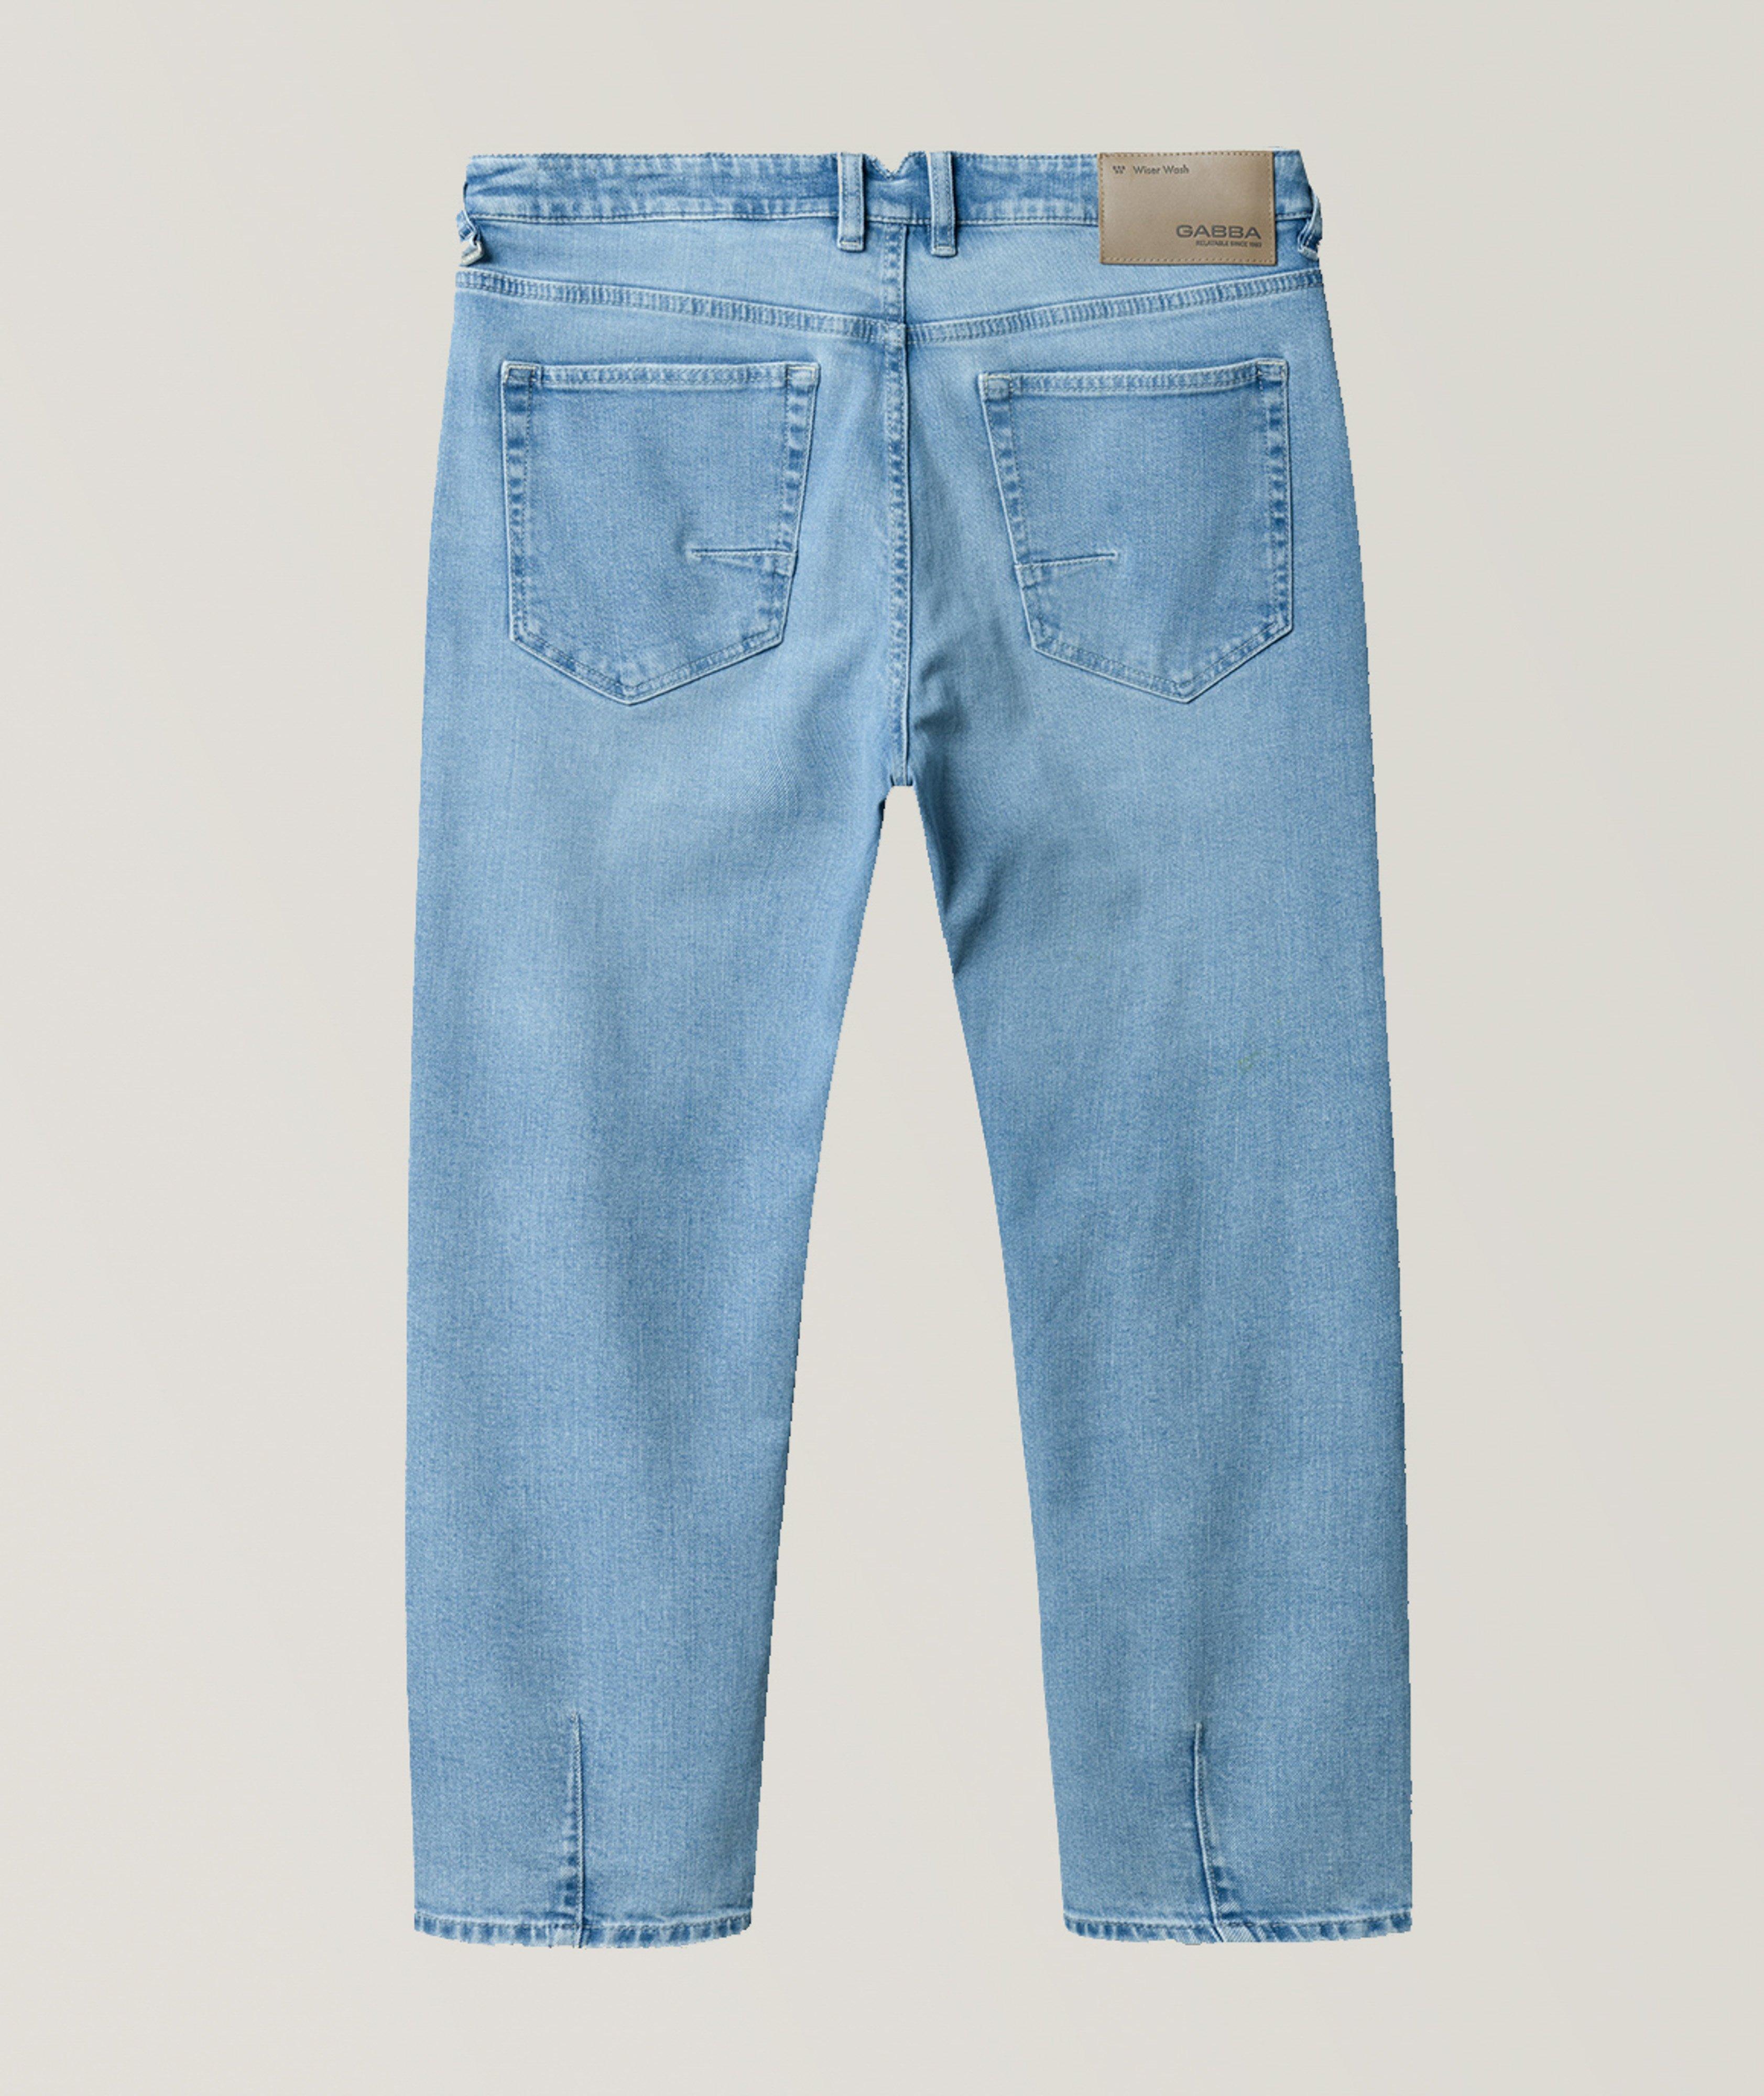 Athen Stretch-Cotton Jeans image 1